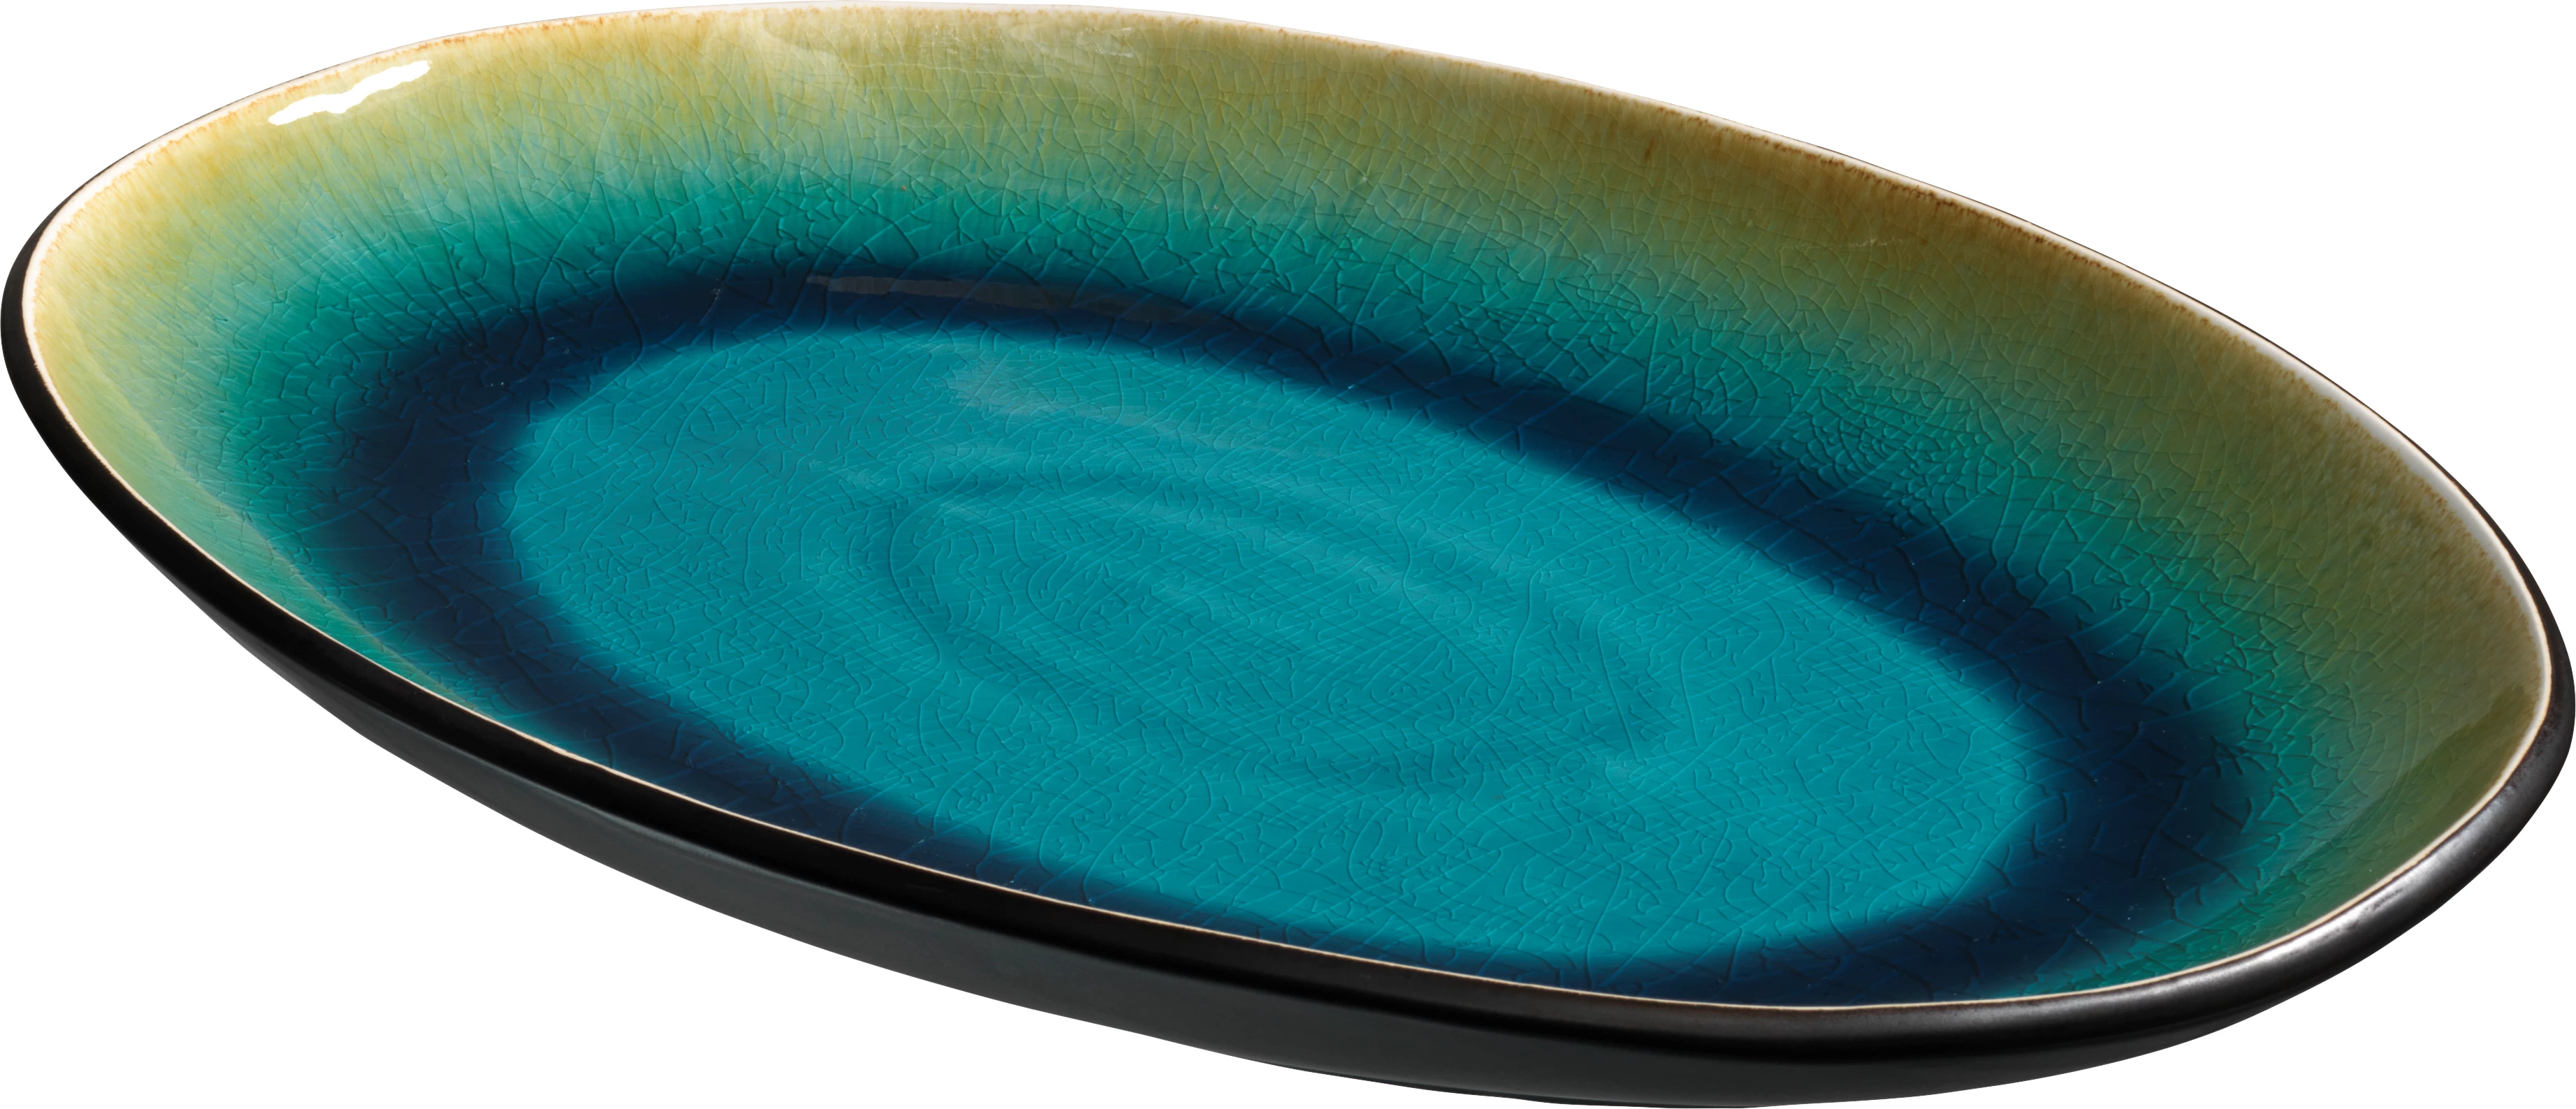 Cabo fad, oval, blå, 40 x 27 cm